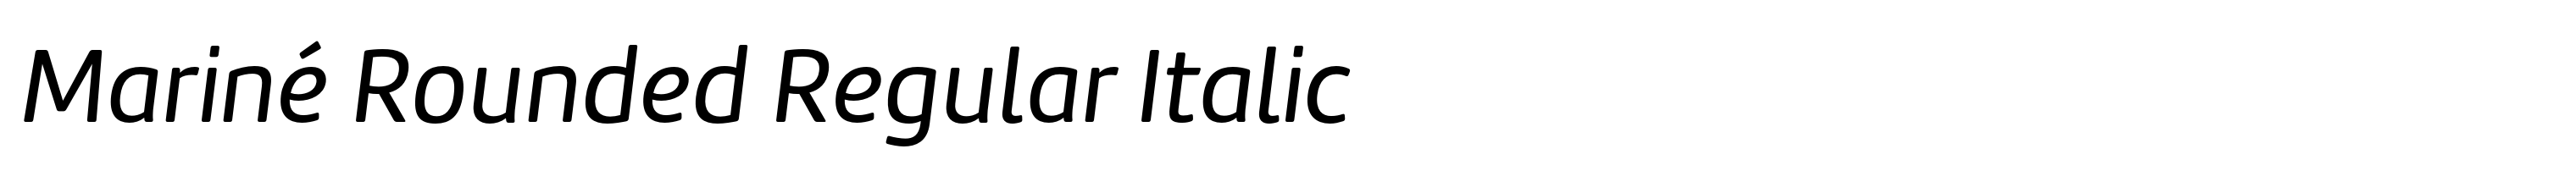 Mariné Rounded Regular Italic